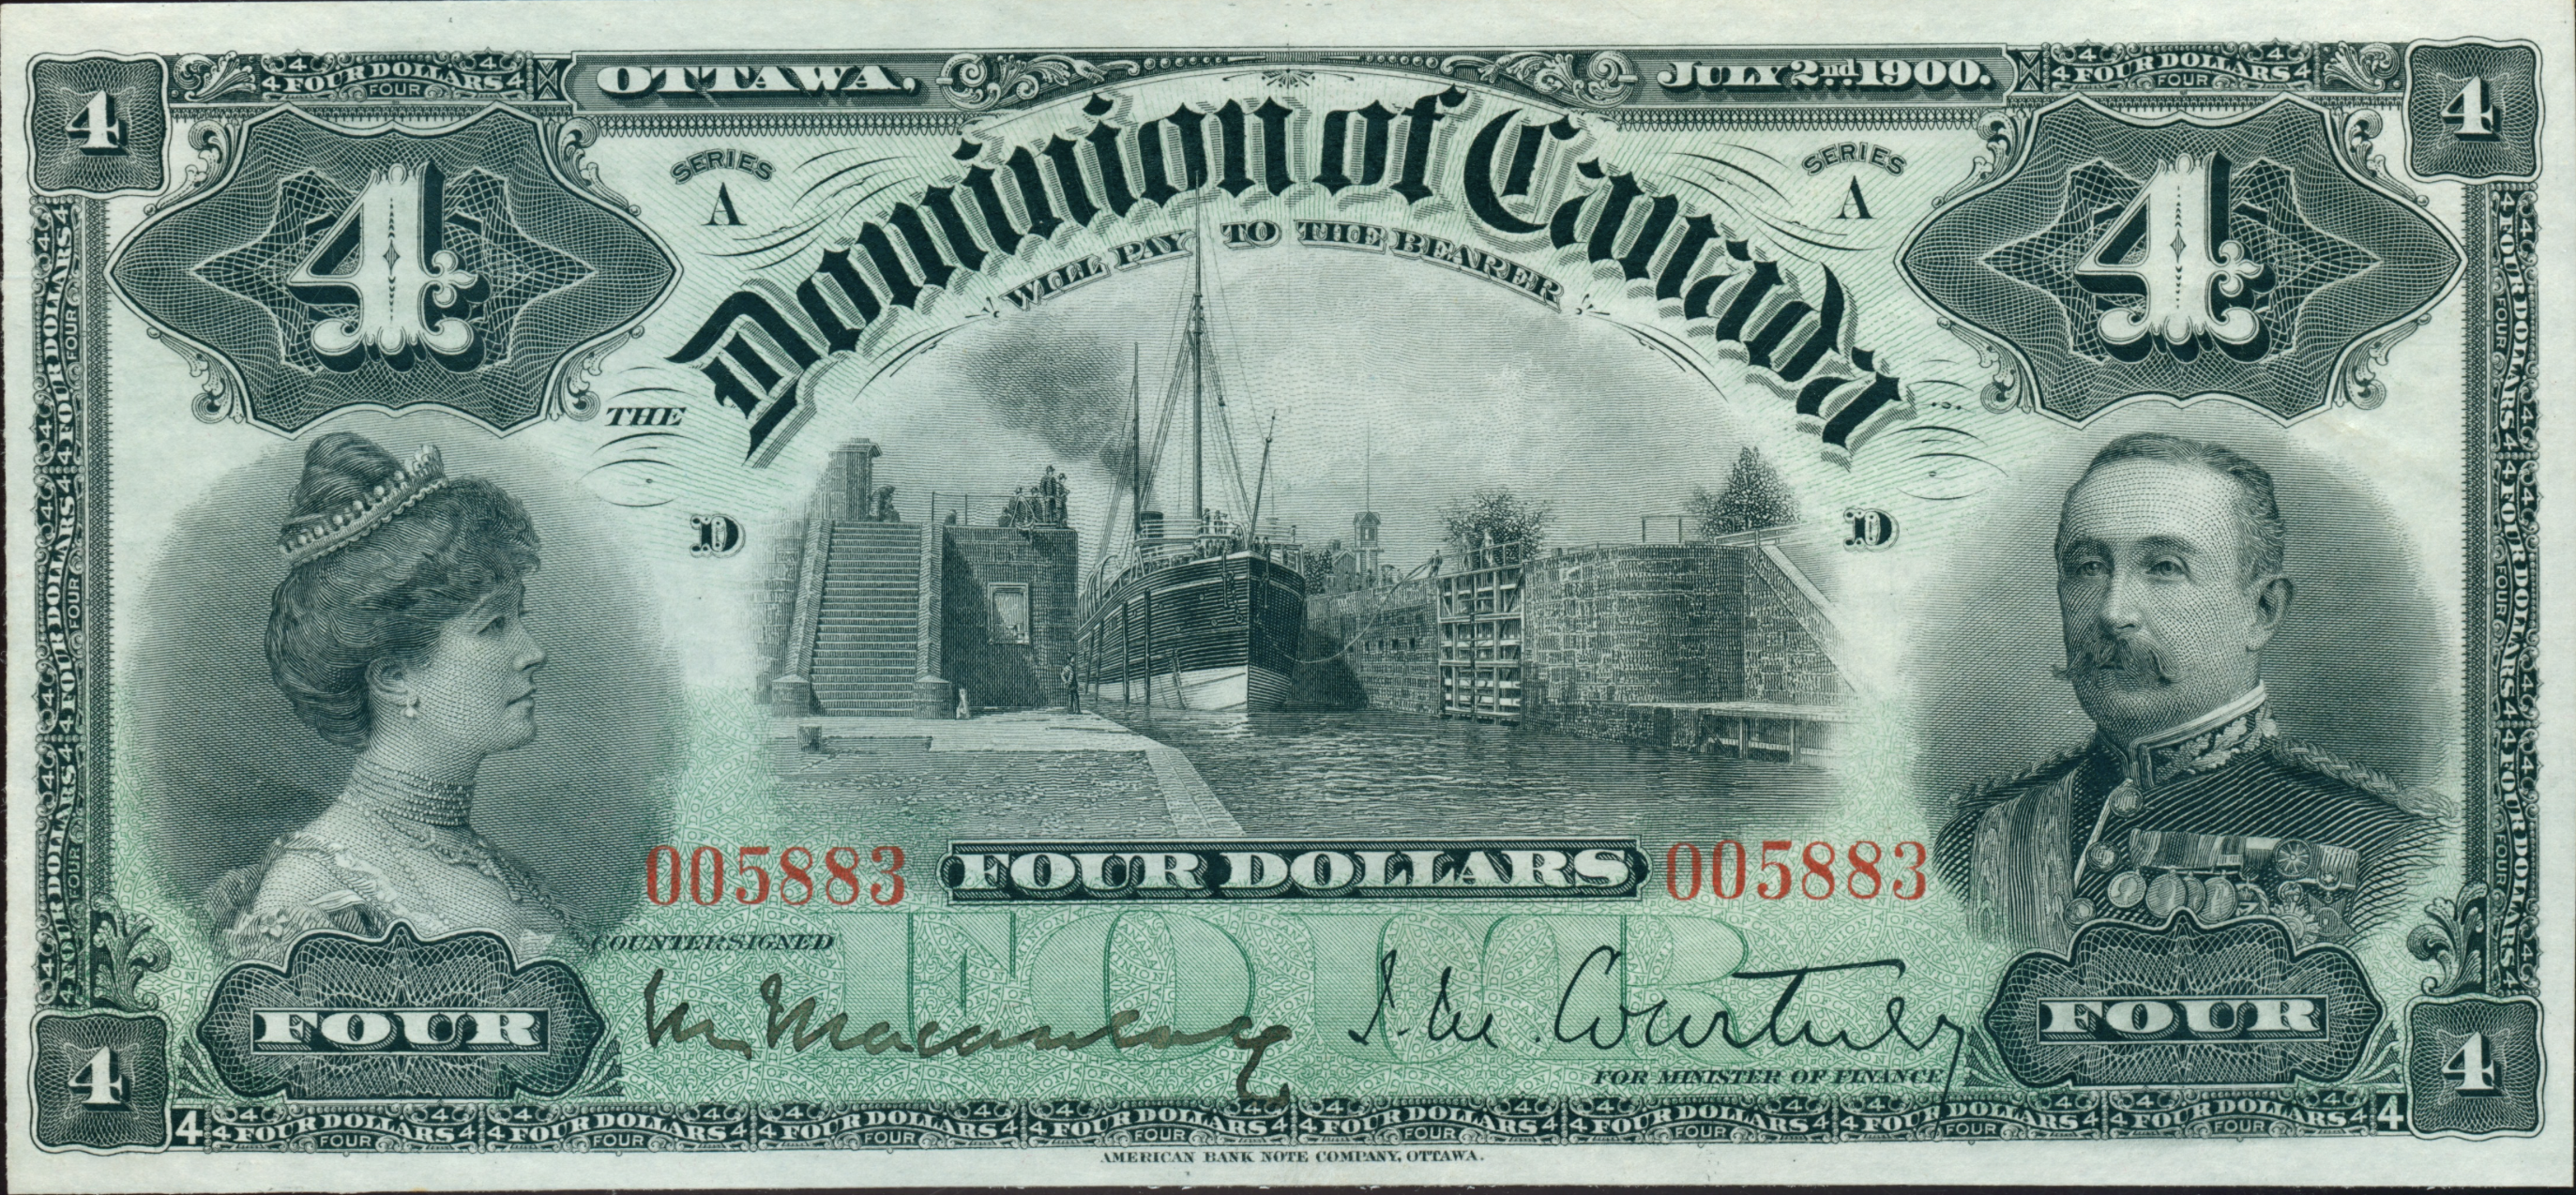 Доллар 1900 года. Доллар купюра. Старые банкноты США. Доллары 19 века